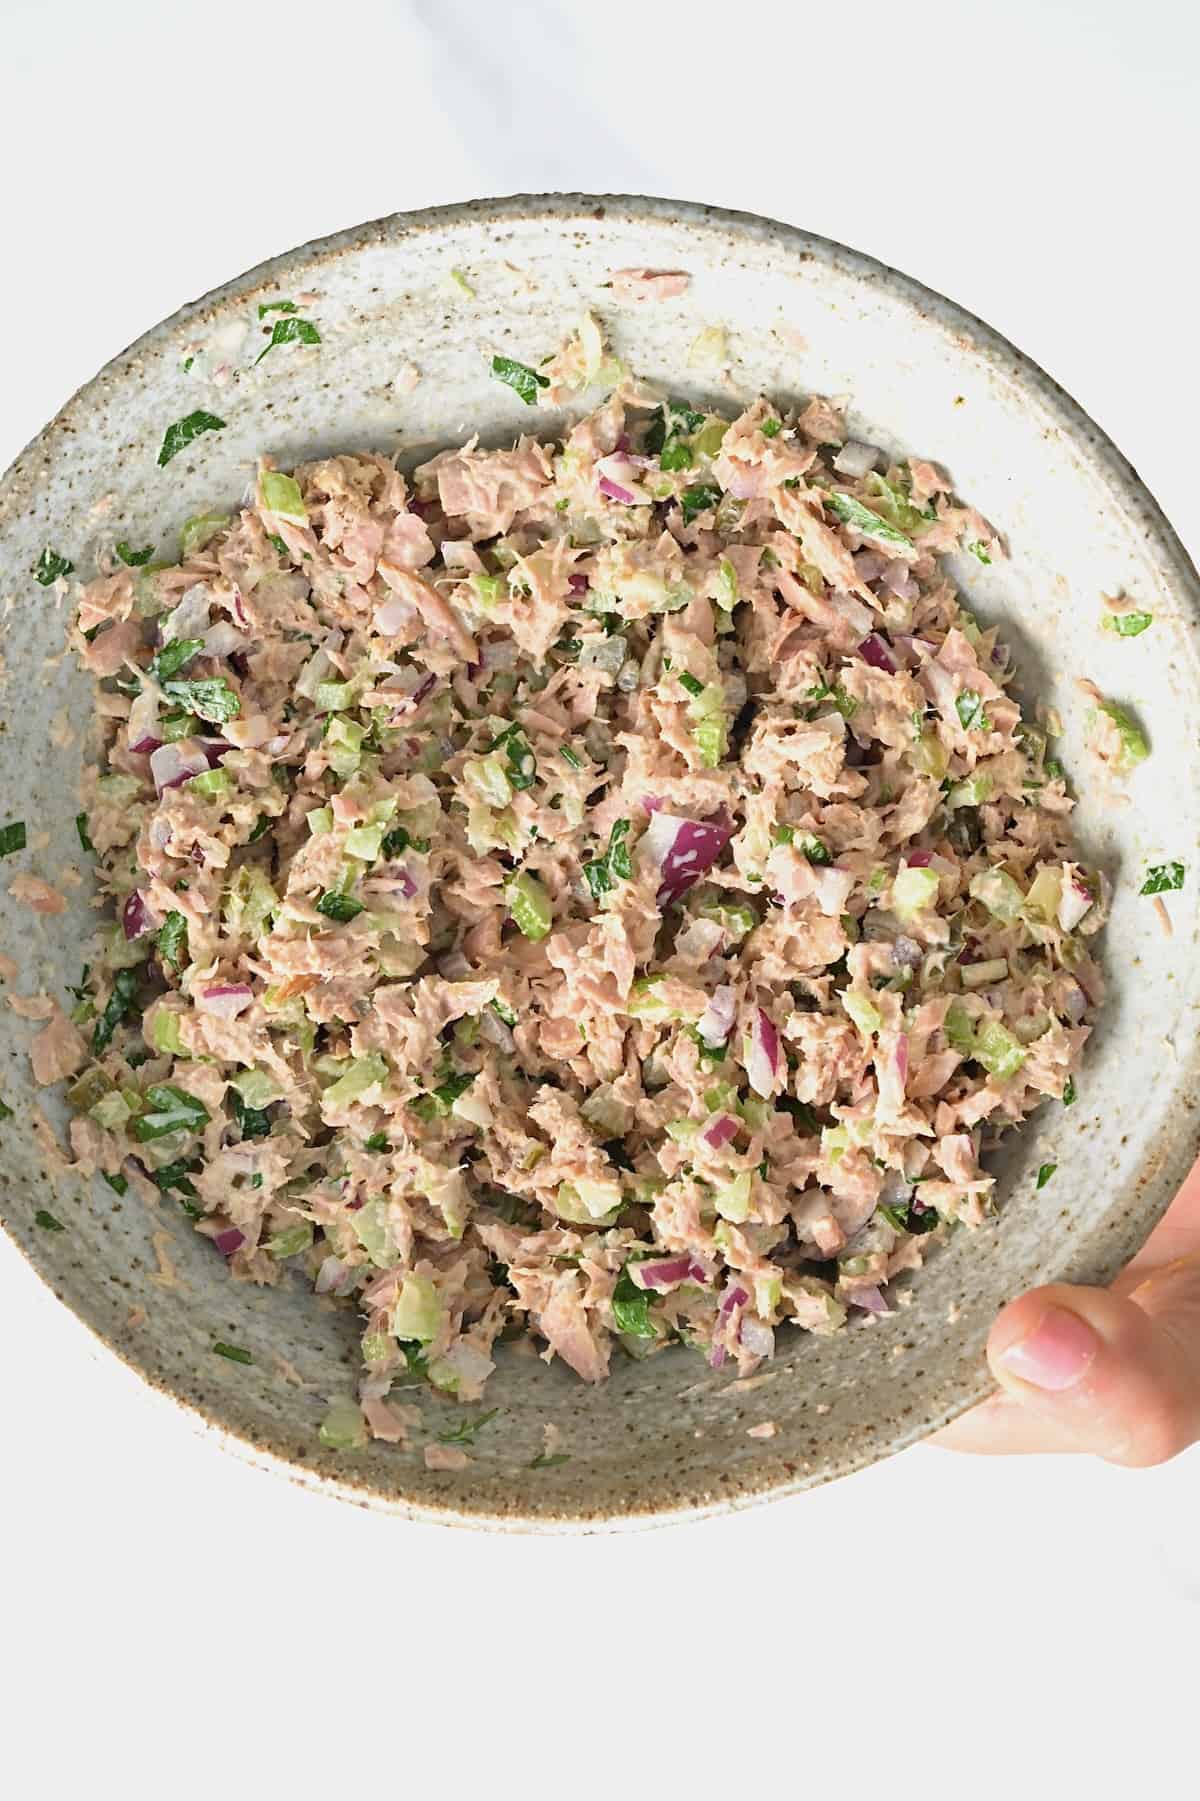 Homemade tuna salad in a bowl